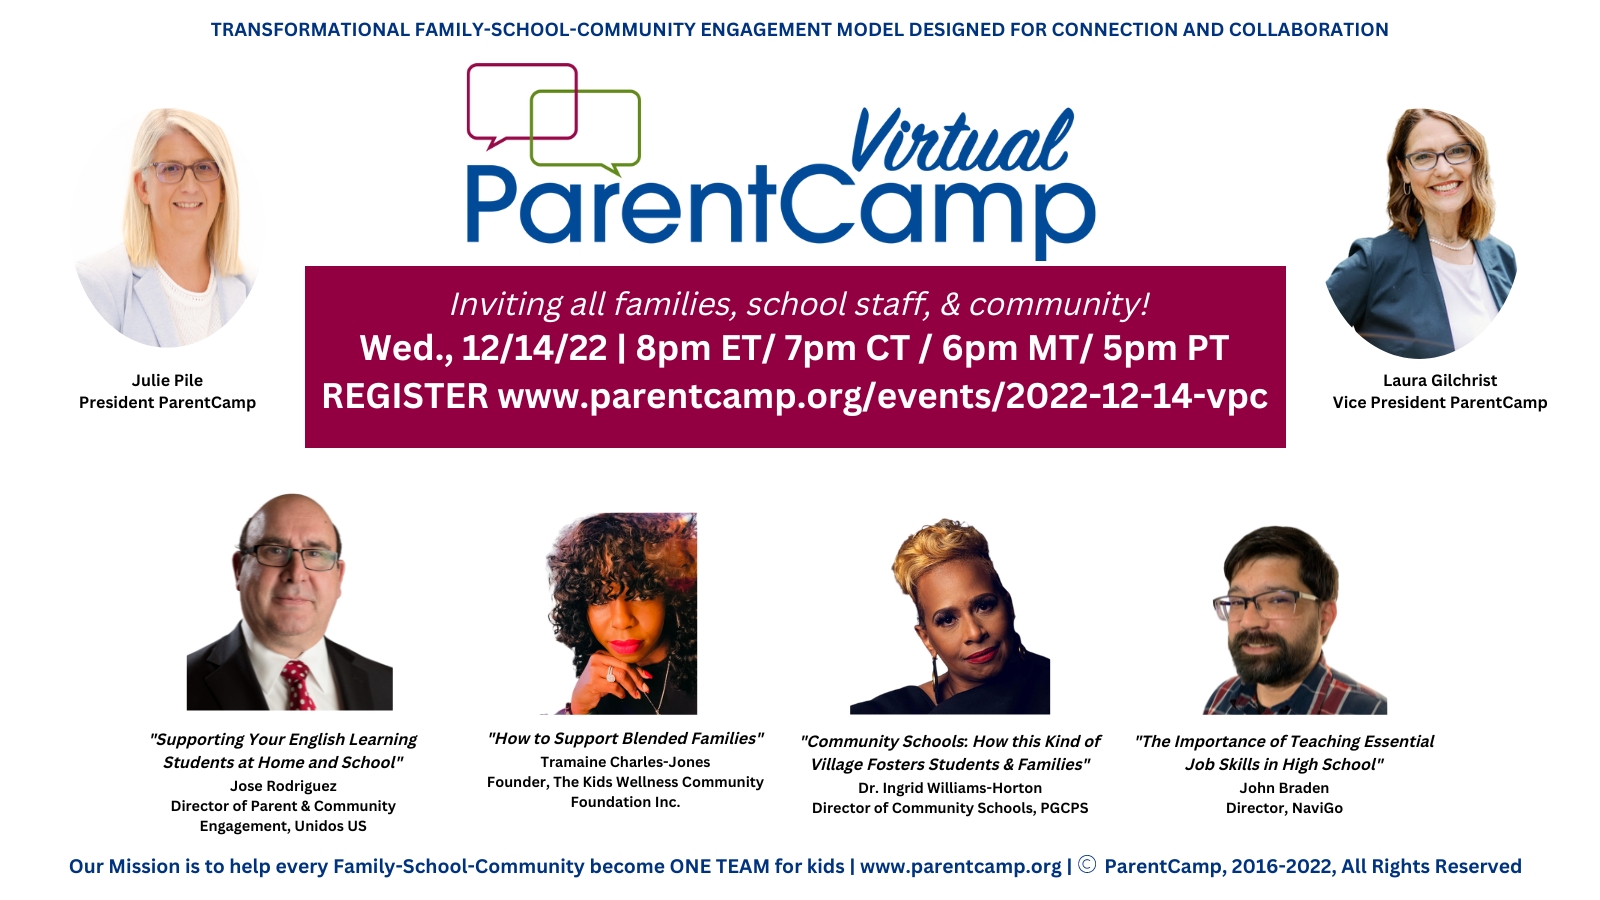 Virtual ParentCamp is December 14, 2022